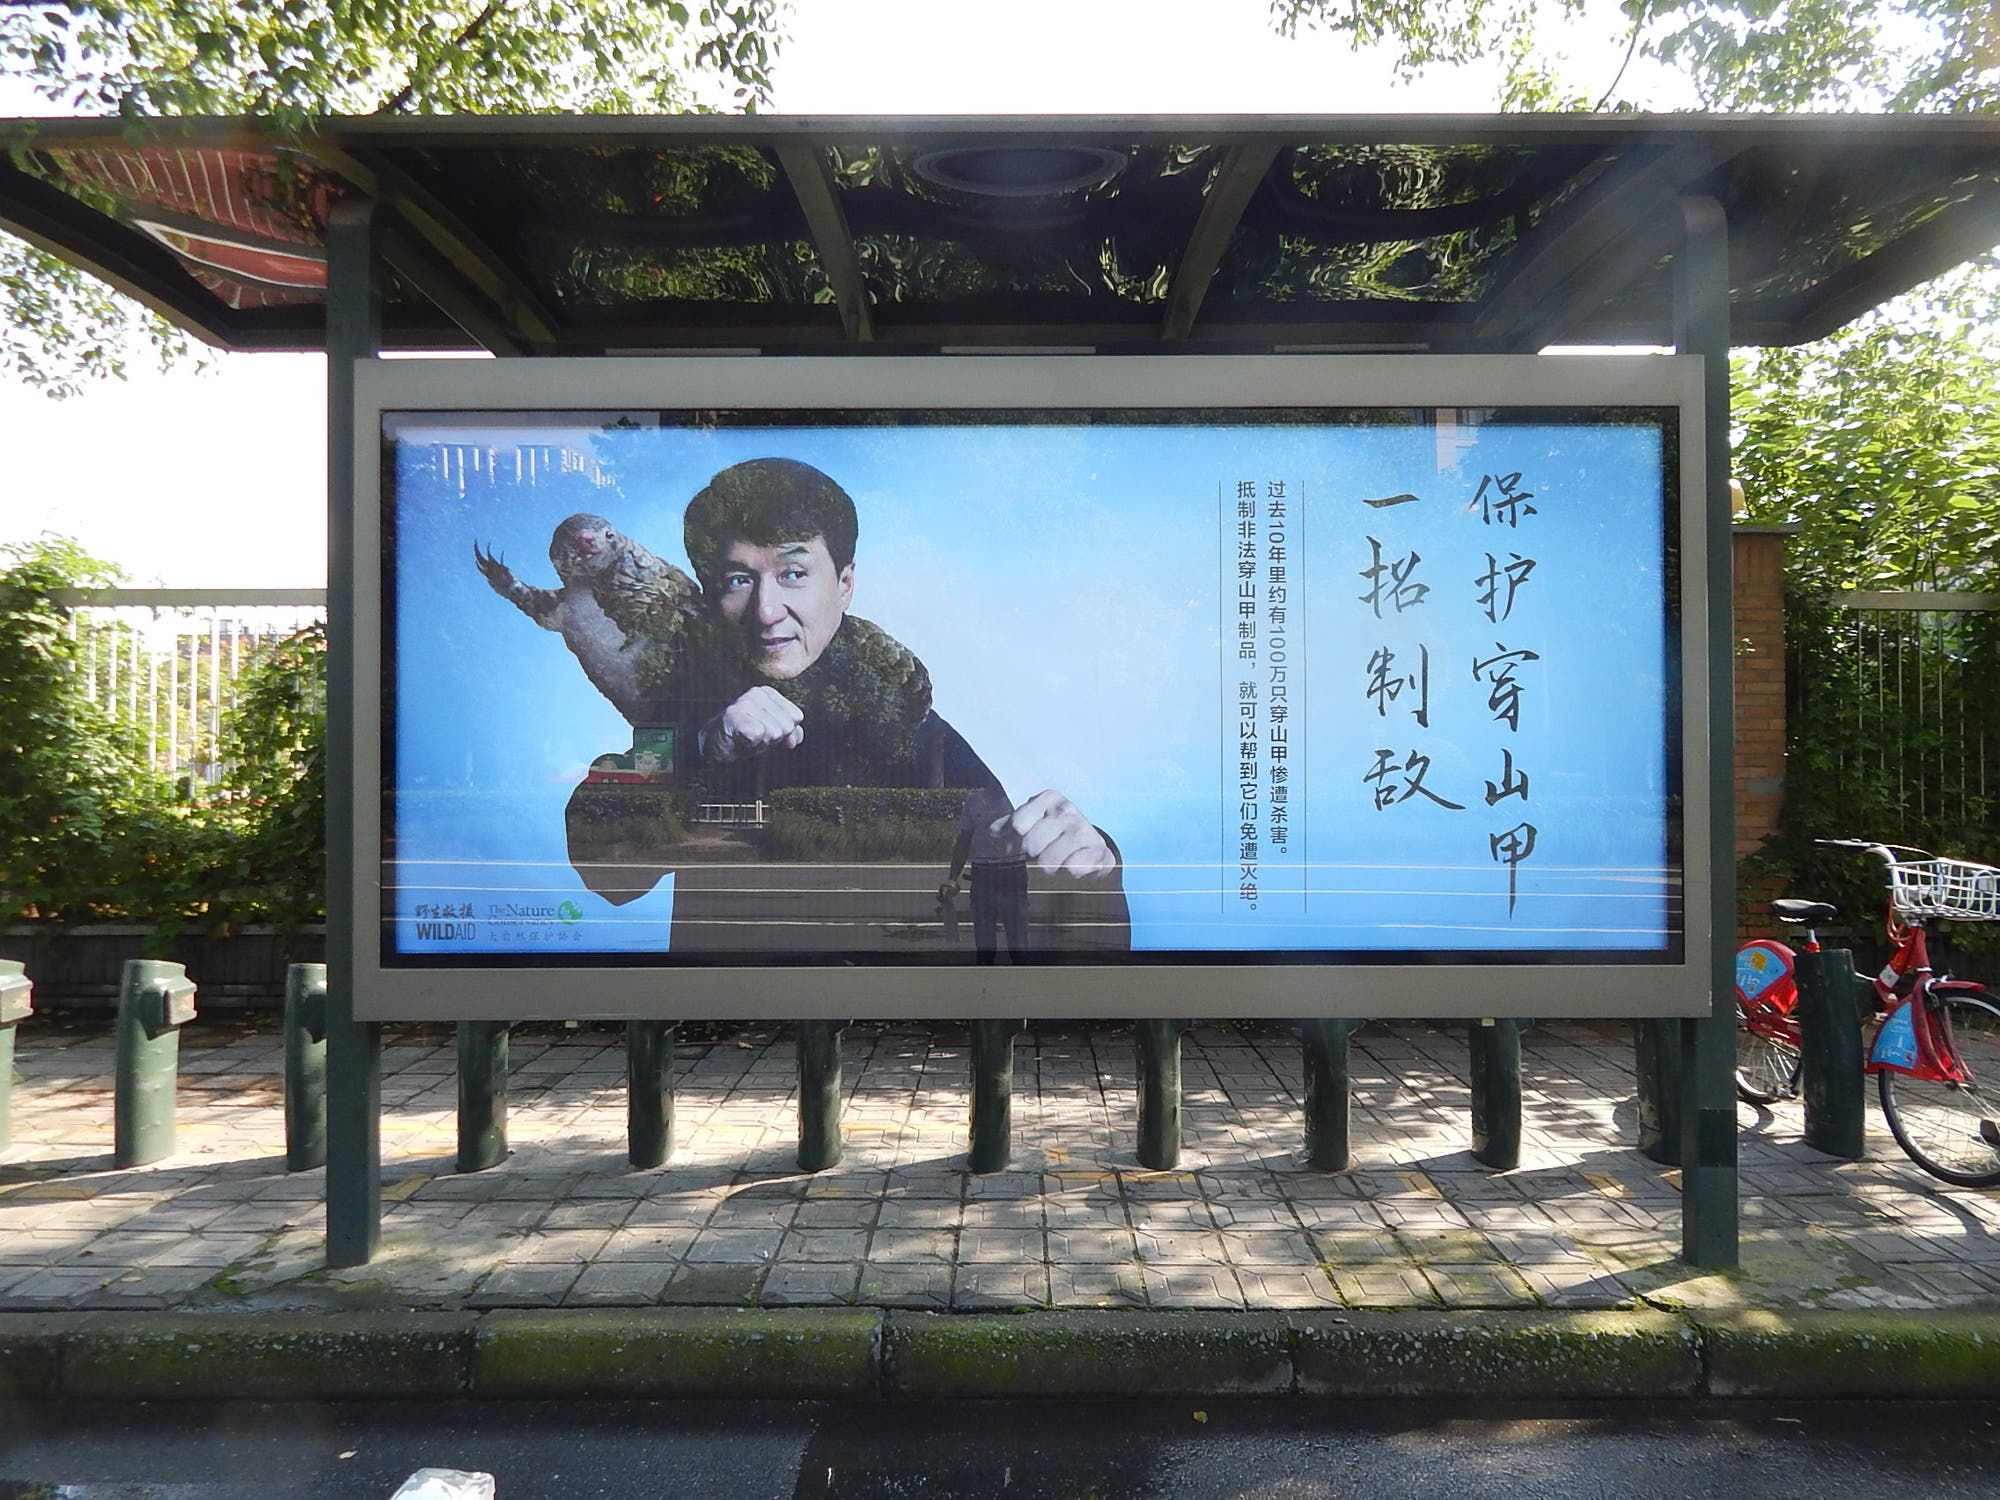 Reklame in Hangzhou